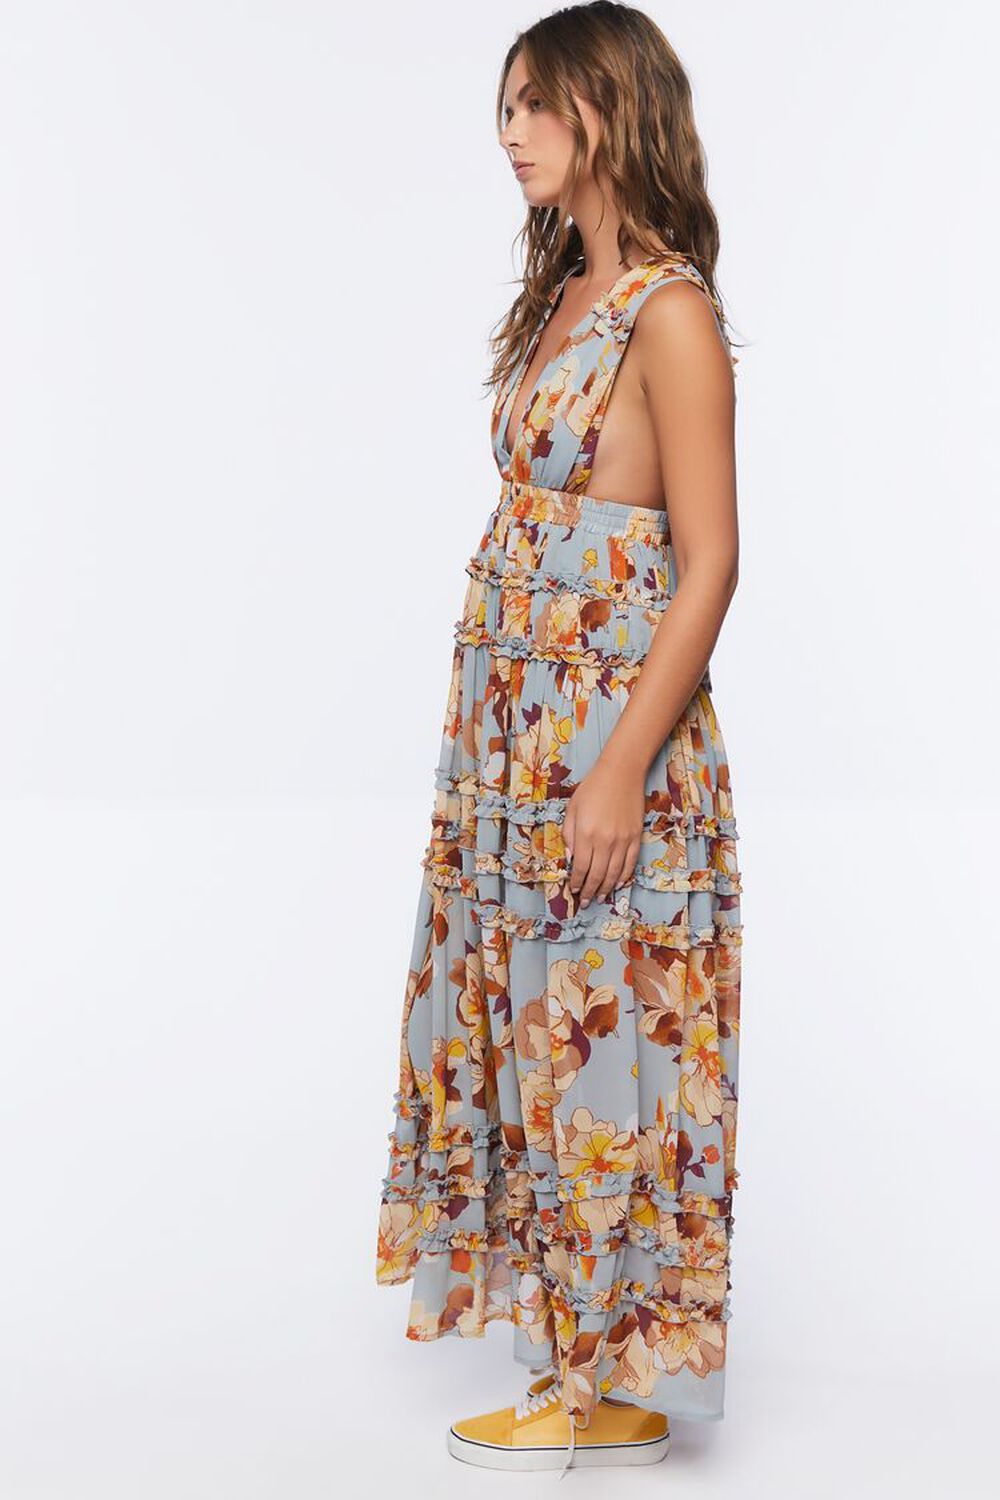 LIGHT BLUE/MULTI Floral Print Maxi Dress, image 2